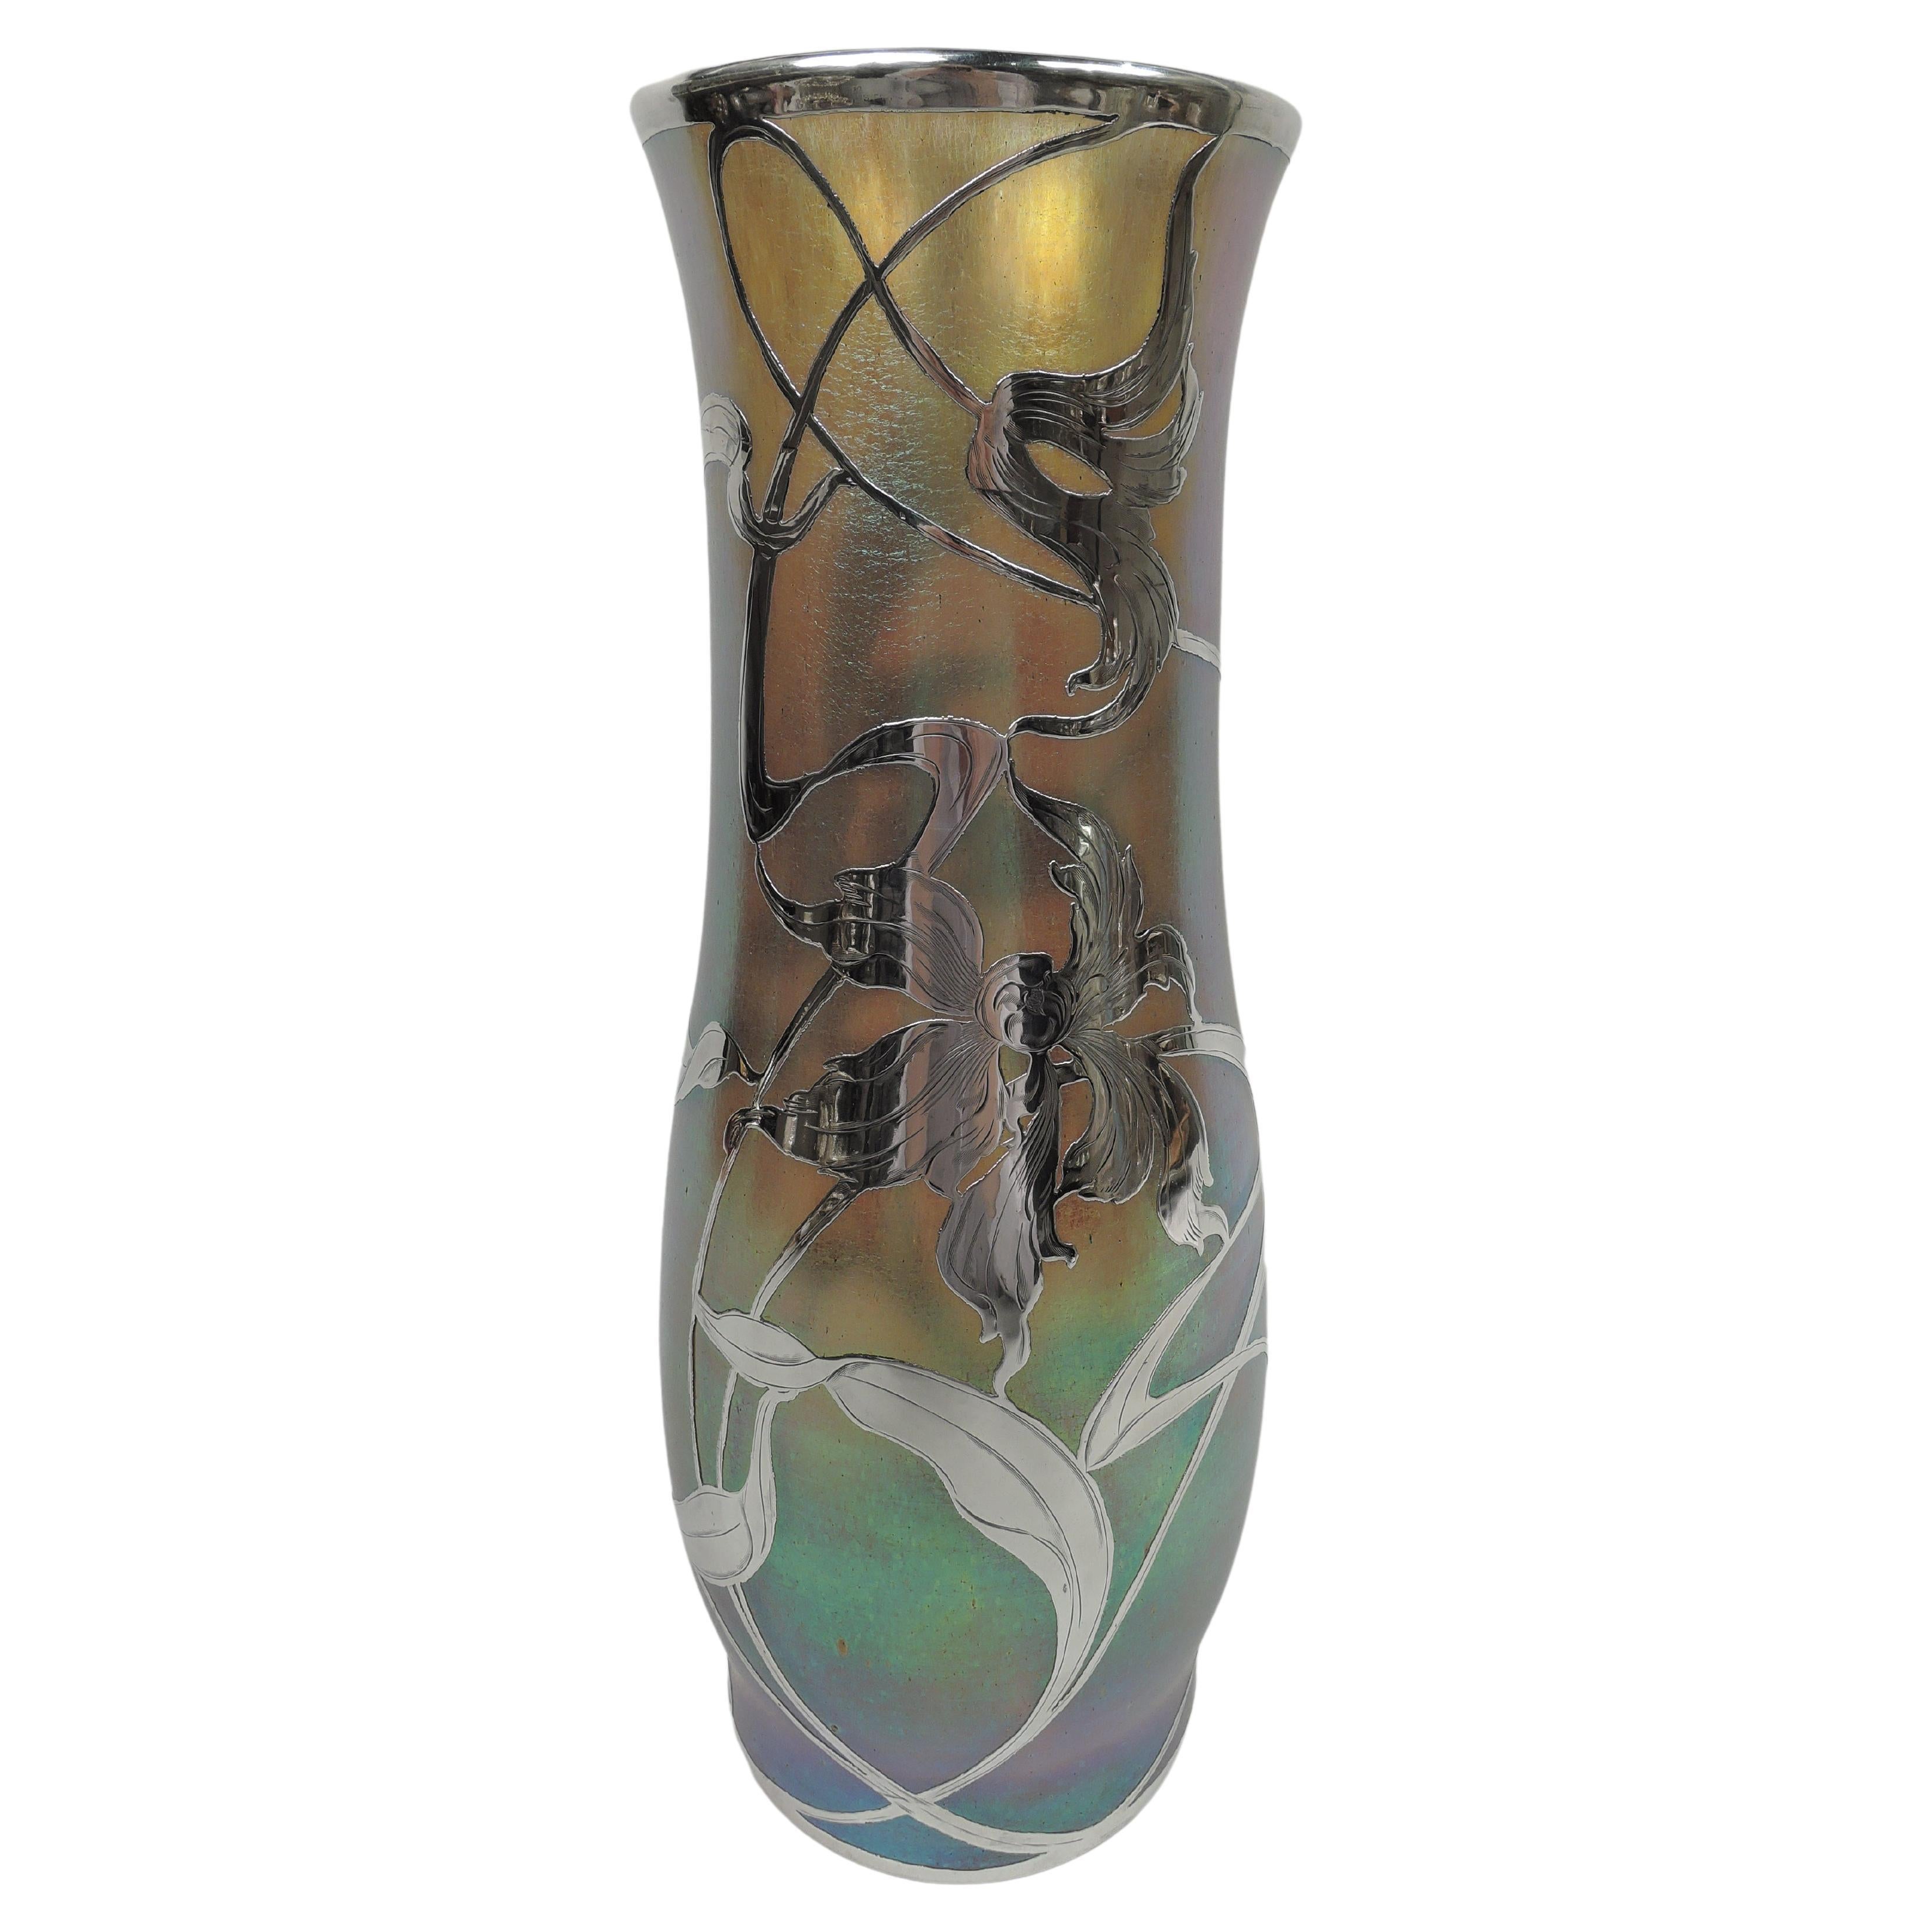 Austrian Loetz Iridescent Art Nouveau Glass Vase Sterling Overlay For Sale At 1stdibs Loetz